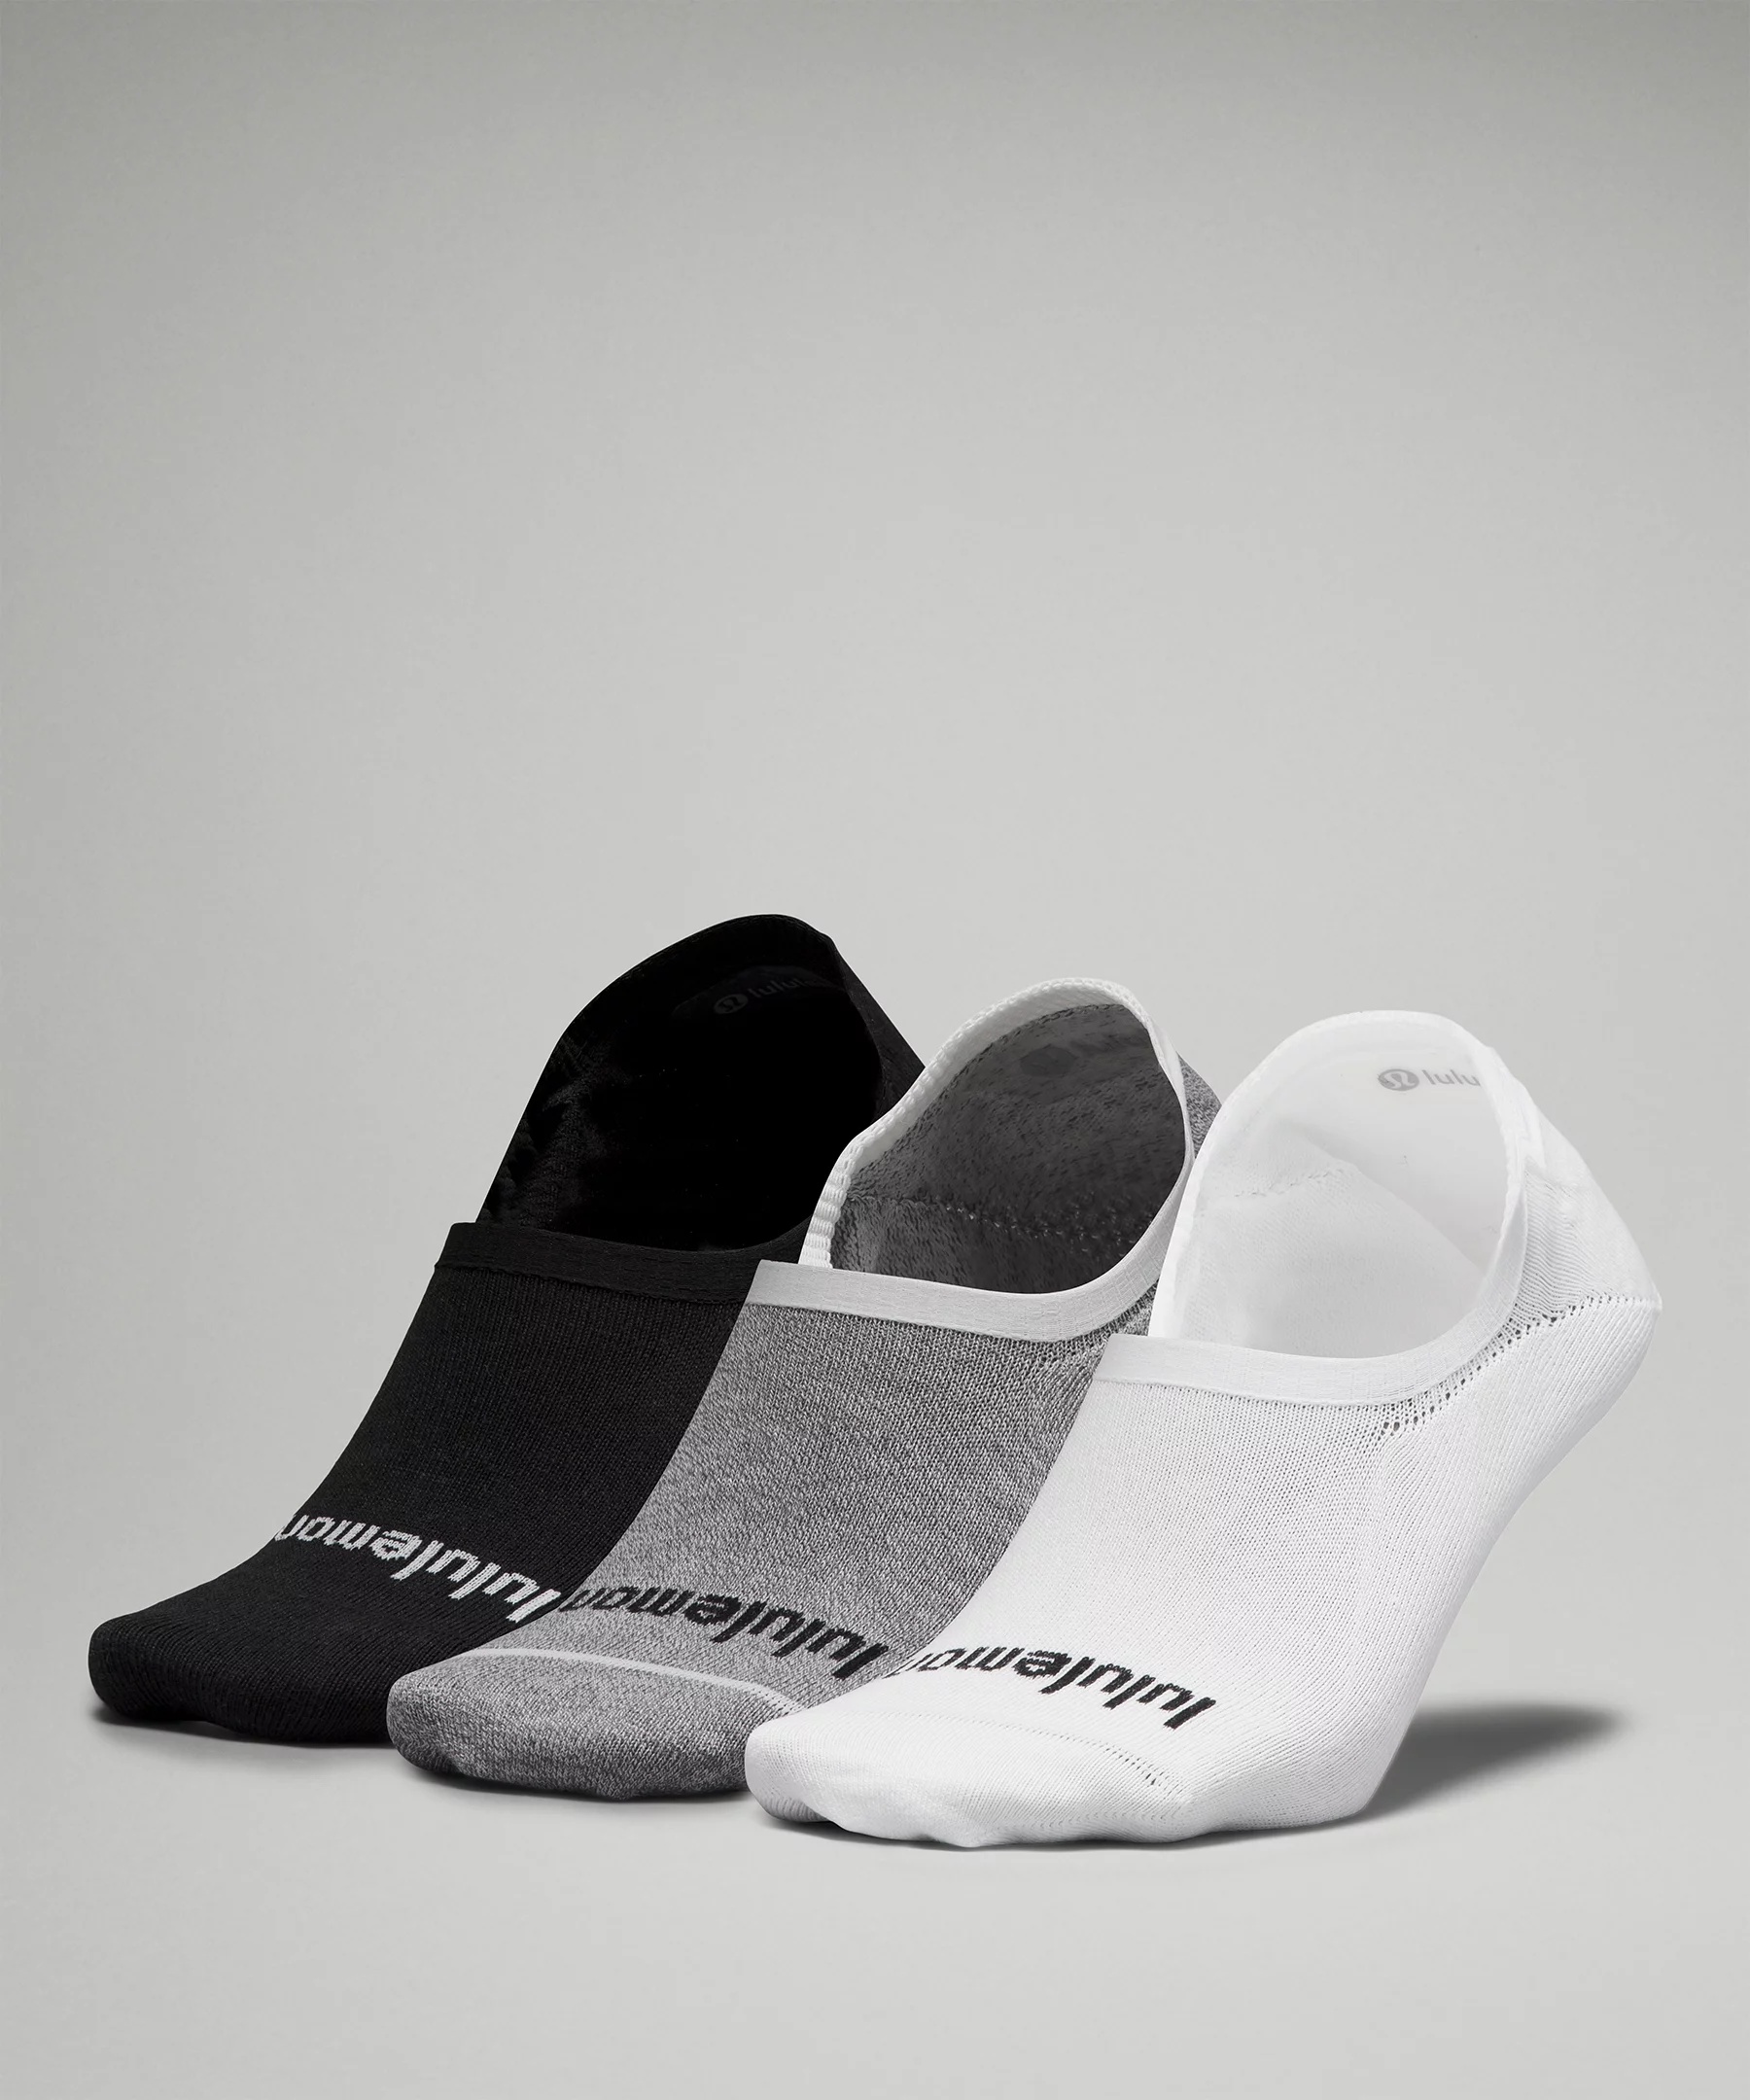 Men's Daily Stride Comfort No-Show Socks *3 Pack - 1